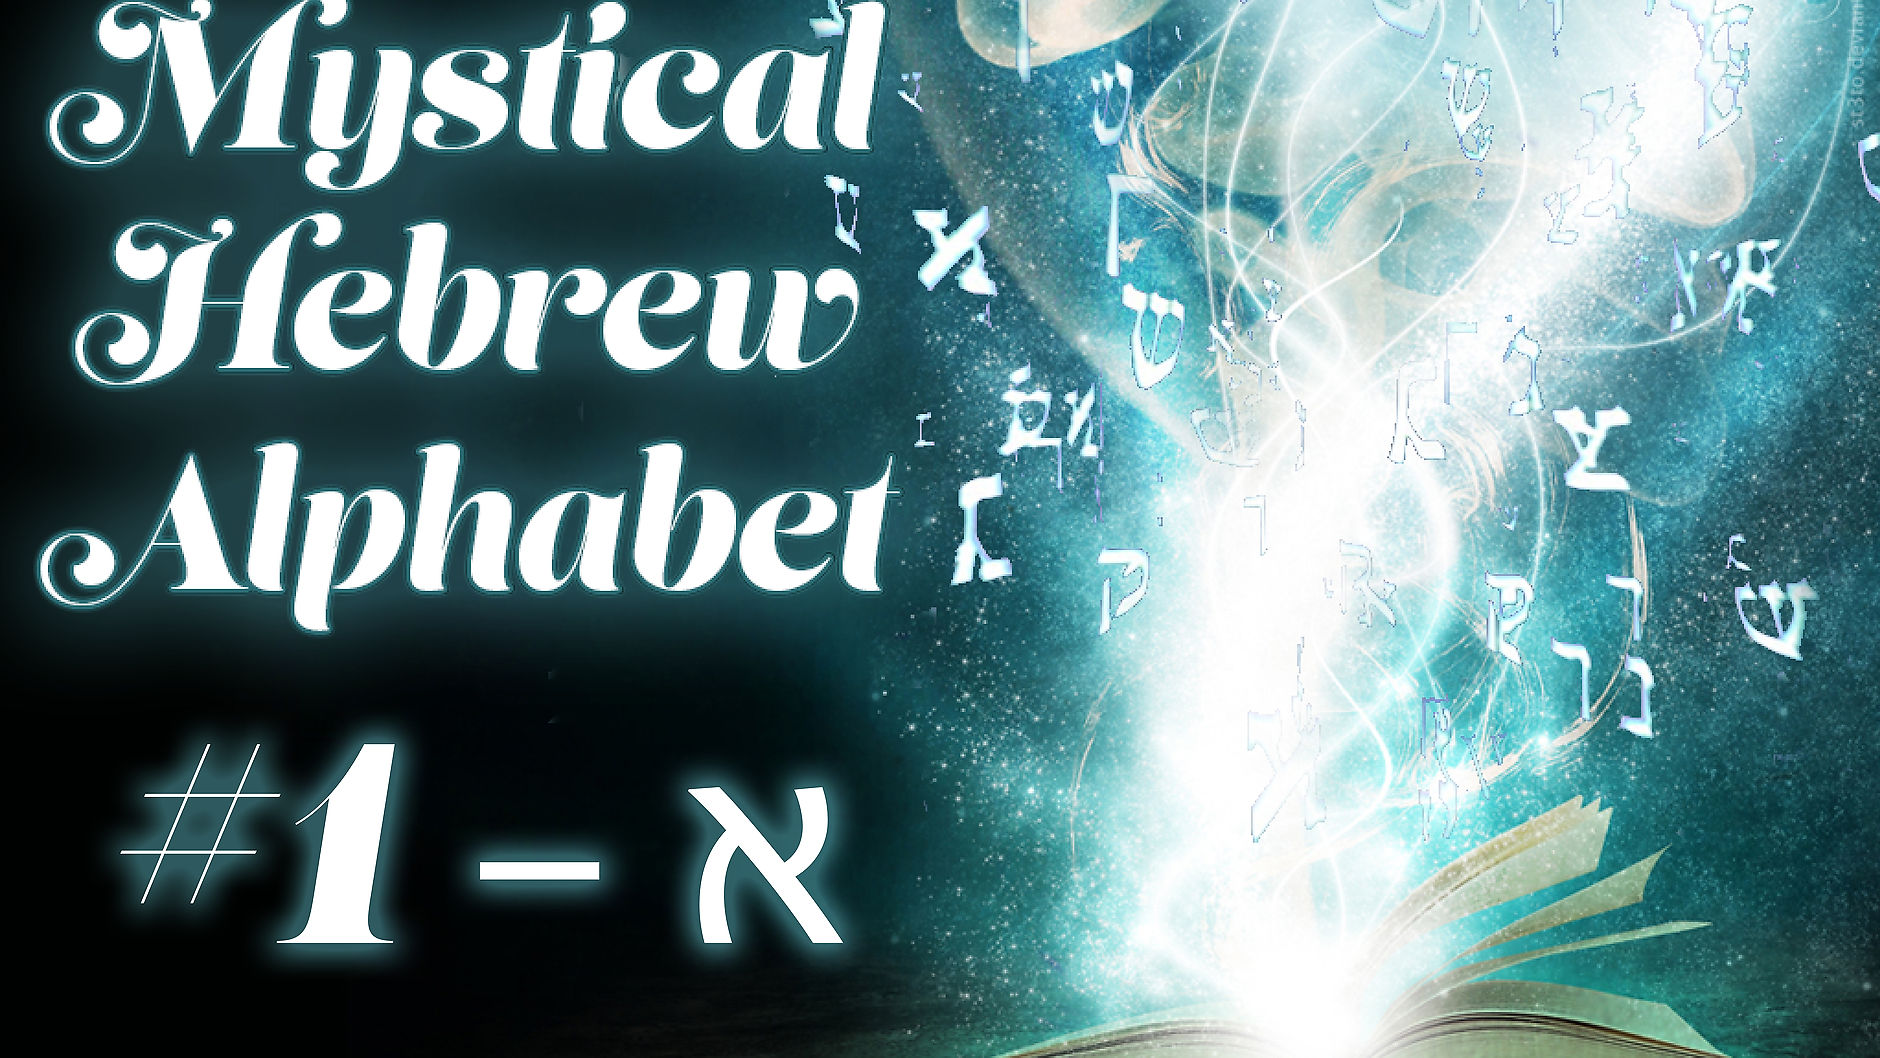 The Mystical Hebrew Alphabet